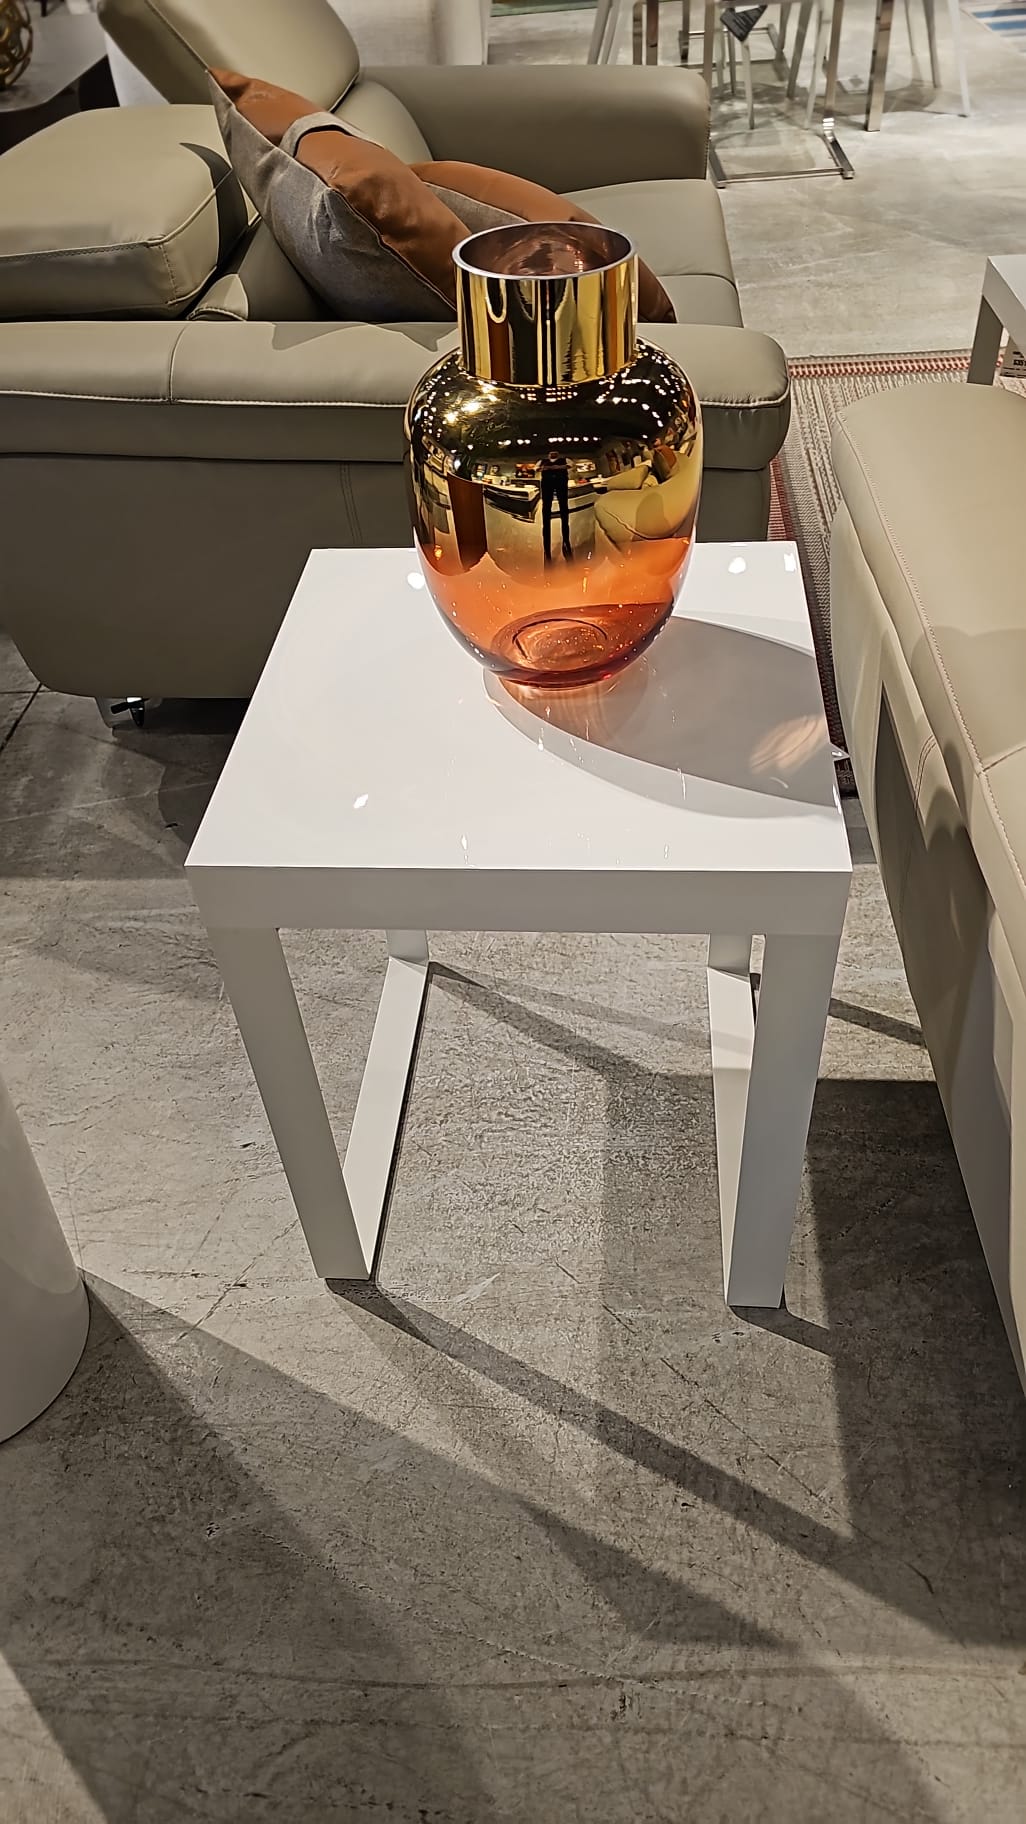 GAP - Side Table (White) - 48058